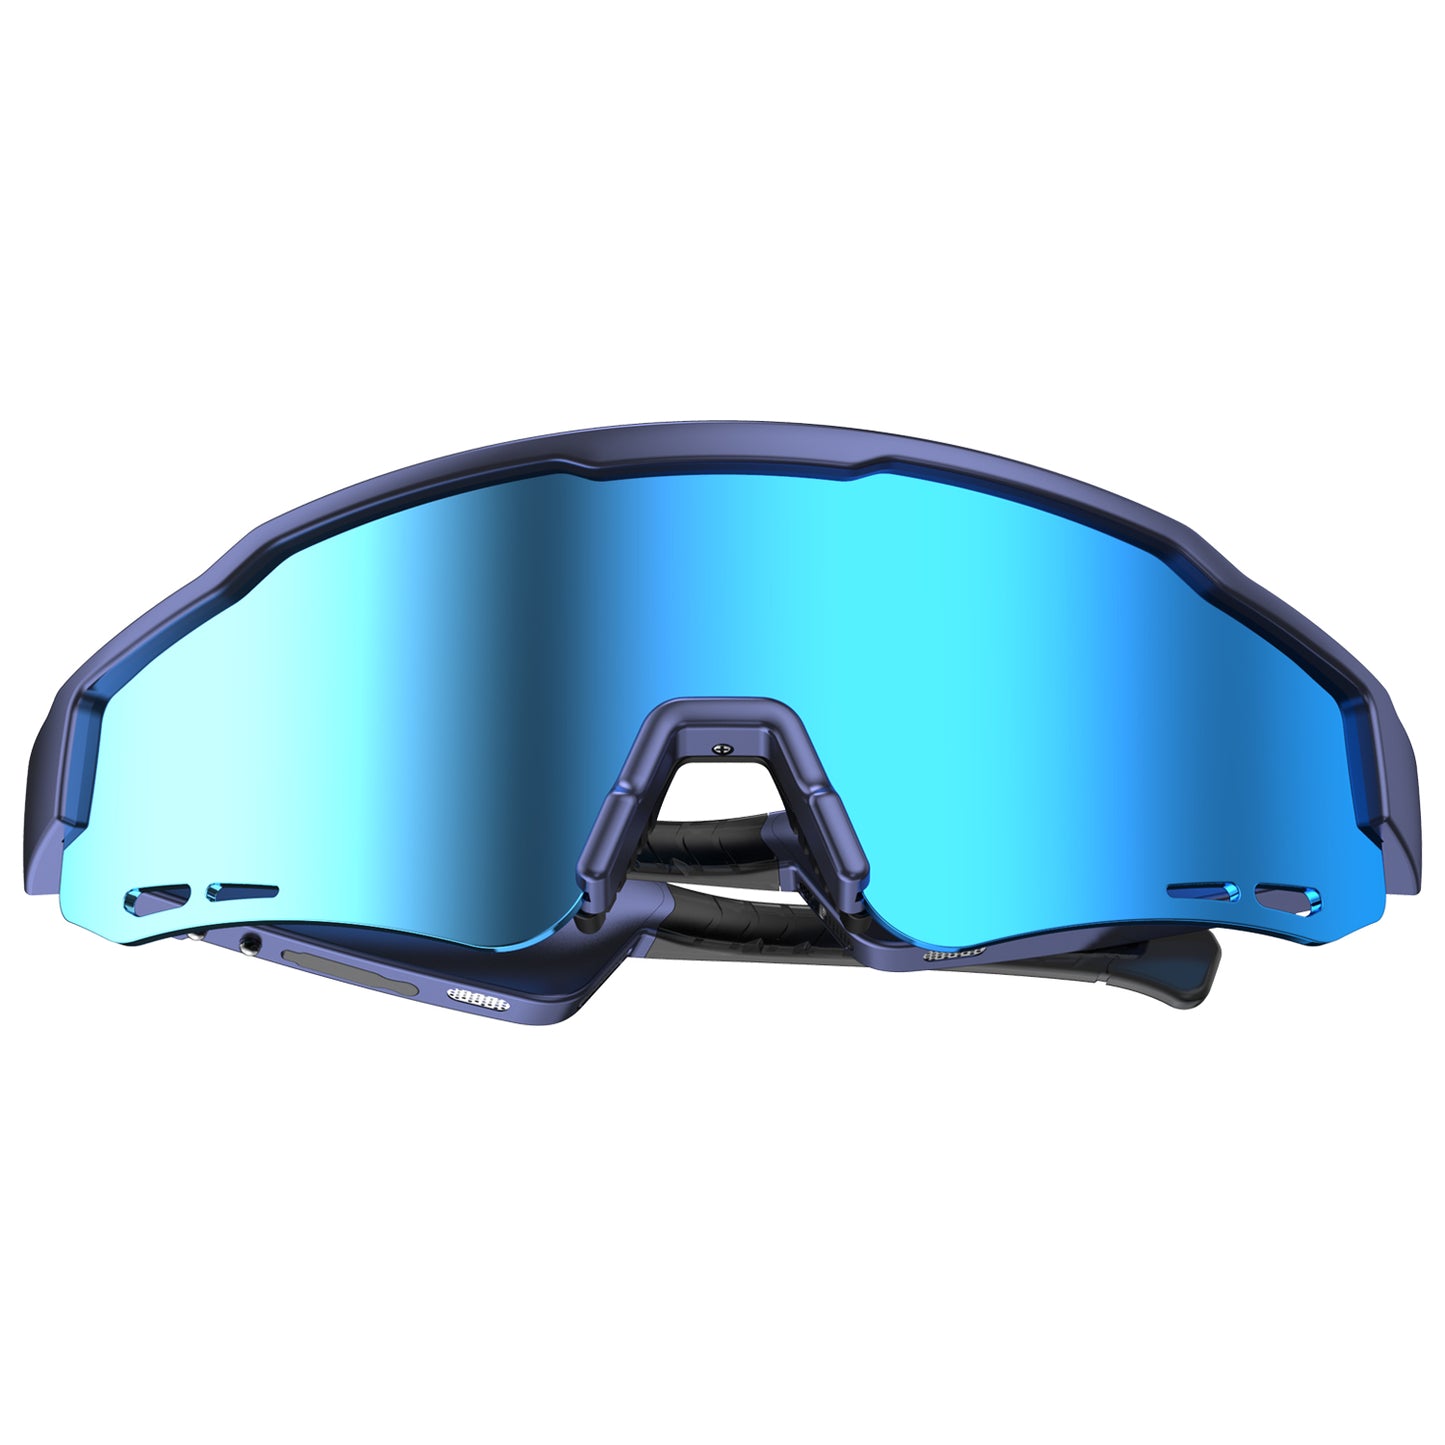 Bluetooth Cycling Glasses - HAKII Wind II